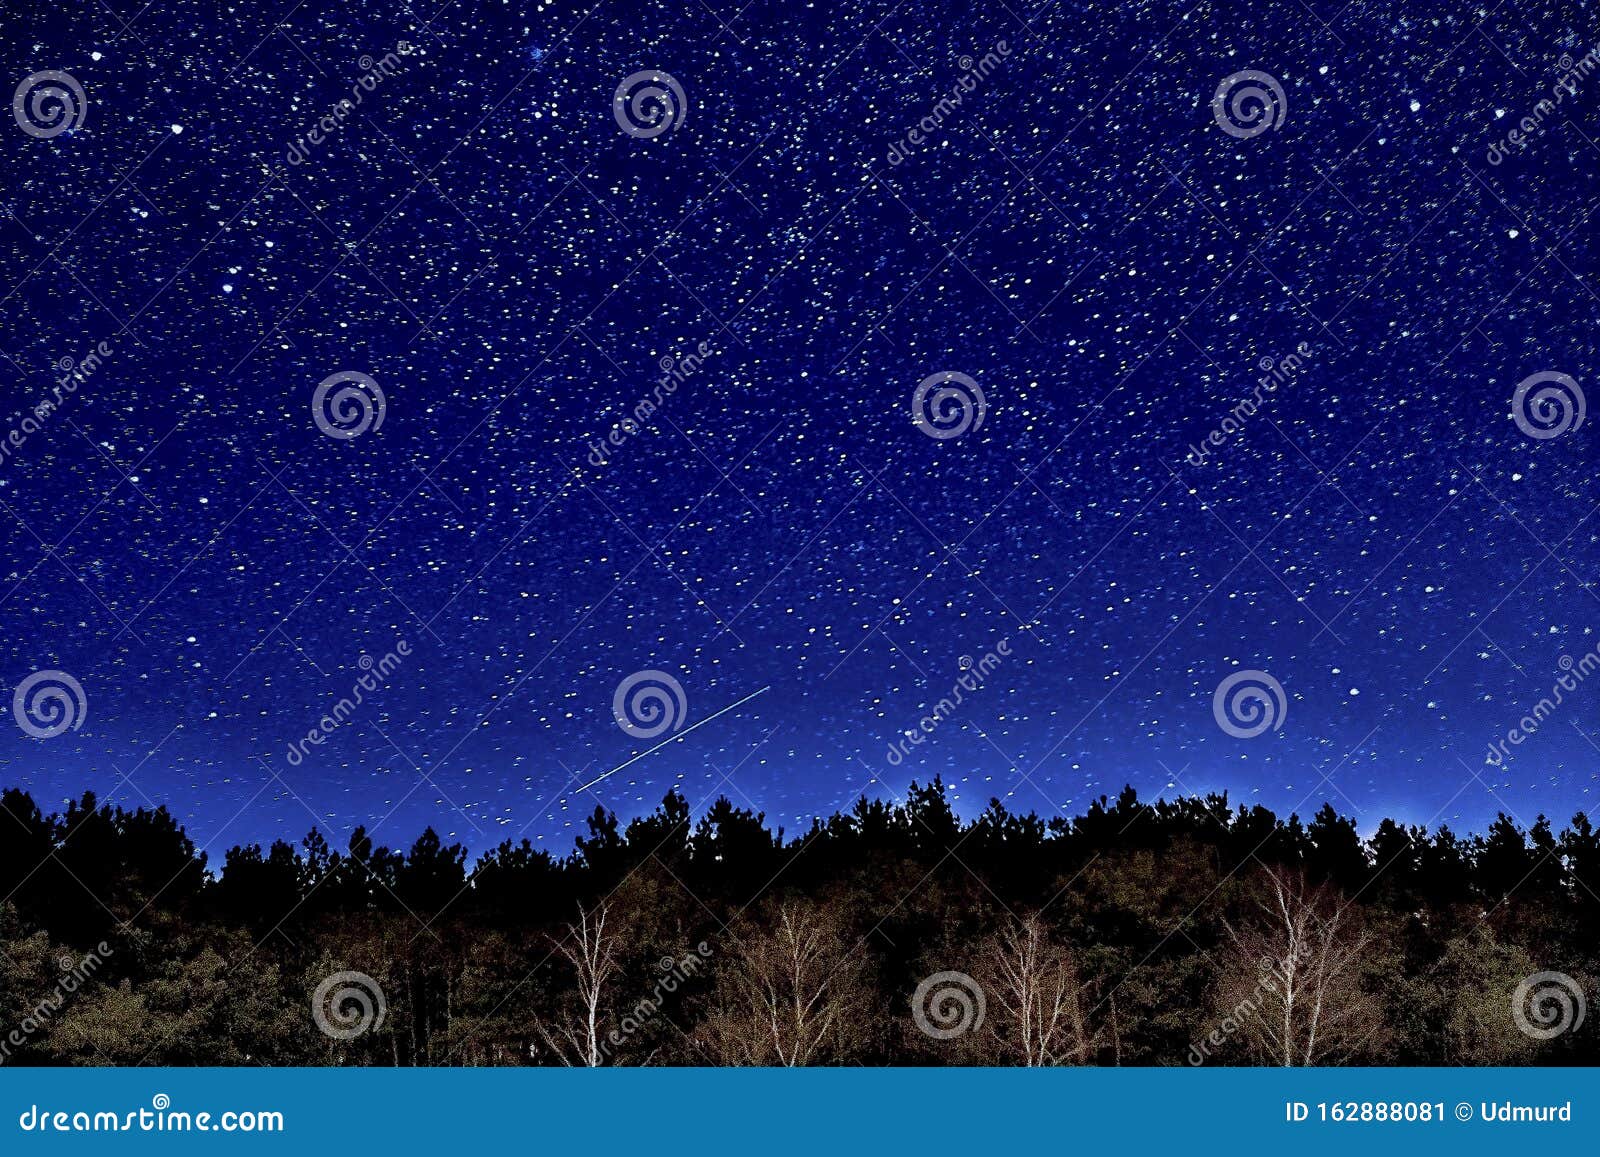 Wonderful Beautiful Night Sky Full of Stars with Milky Way Over ...